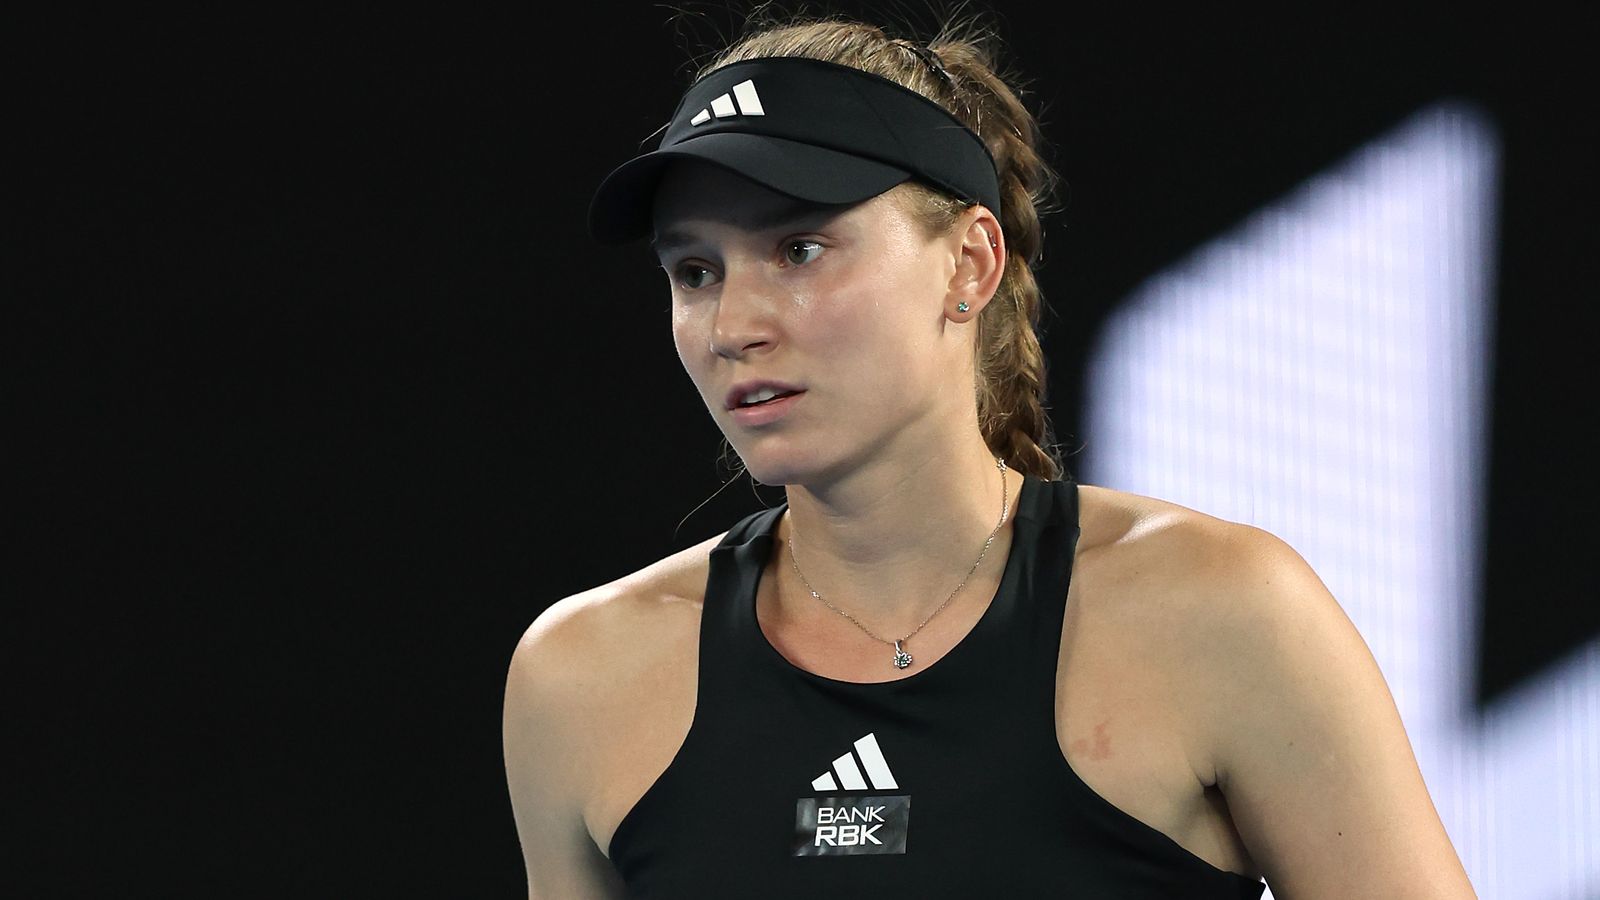 Abierto de Australia: Elena Rybakina derrota a Victoria Azarenka para llegar a la final femenina |  Noticias de tenis